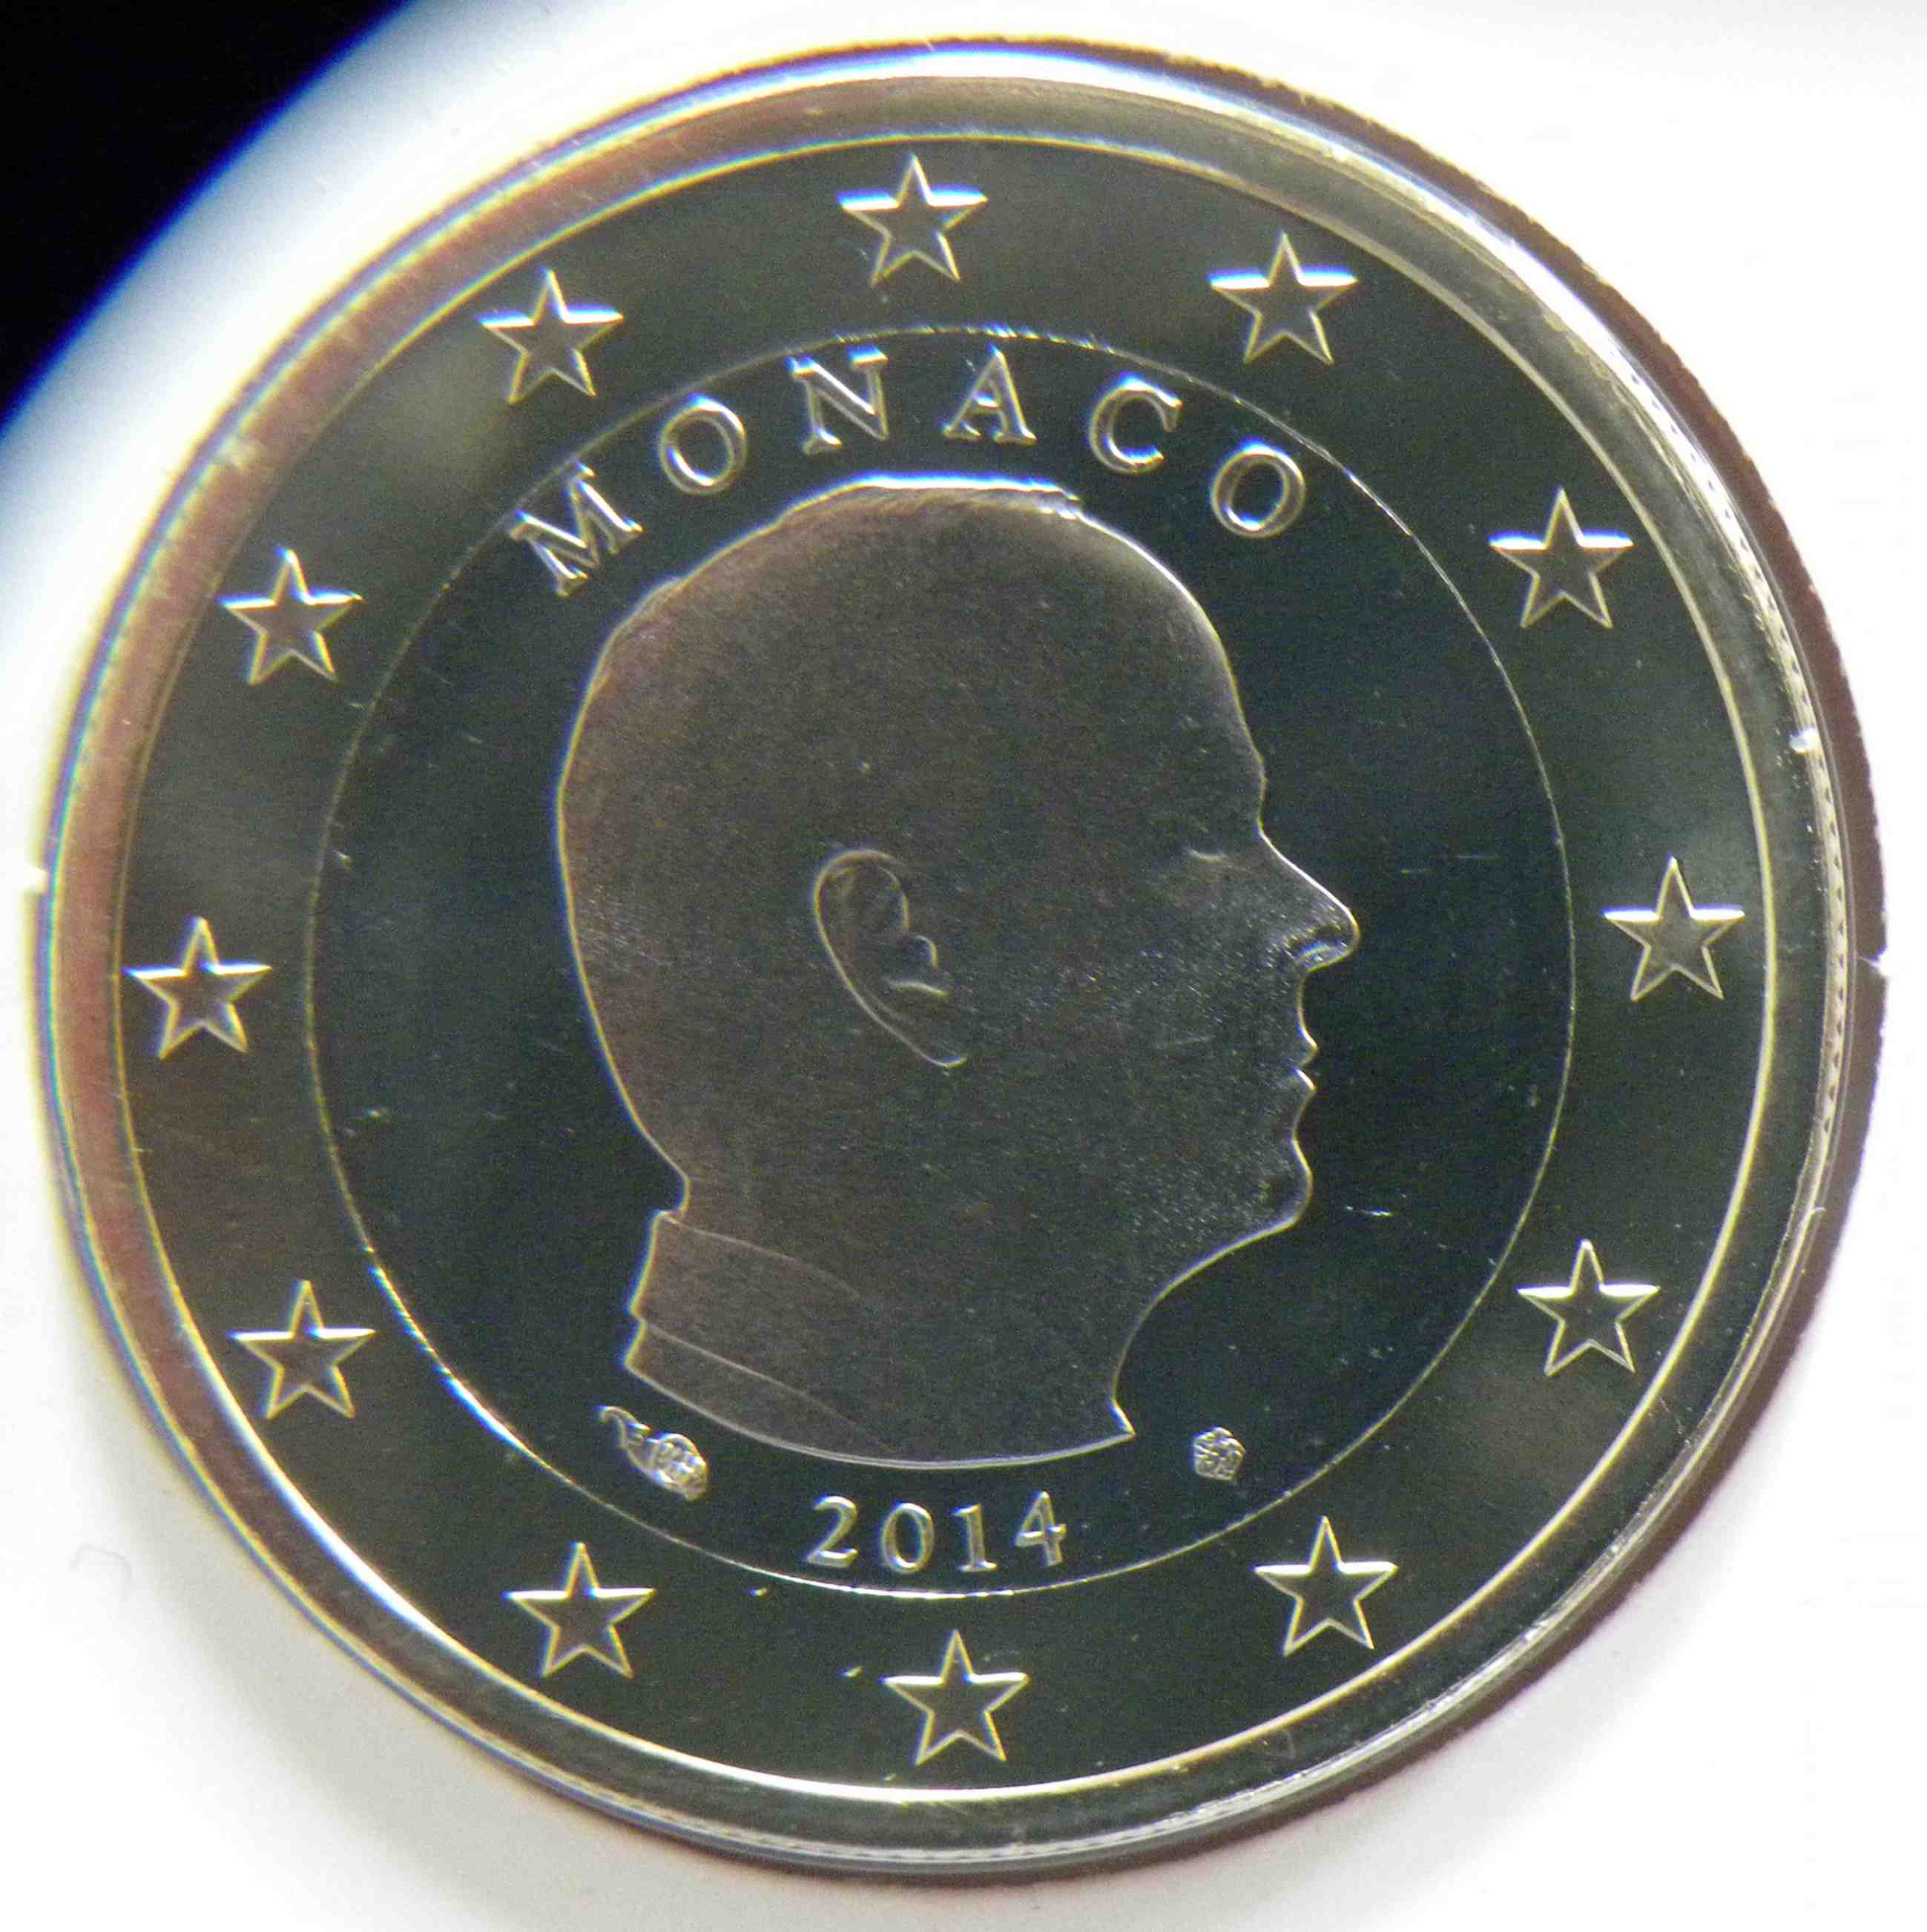 Monaco 1 Euro Münze 2014 - euro-muenzen.tv - Der Online Euromünzen Katalog